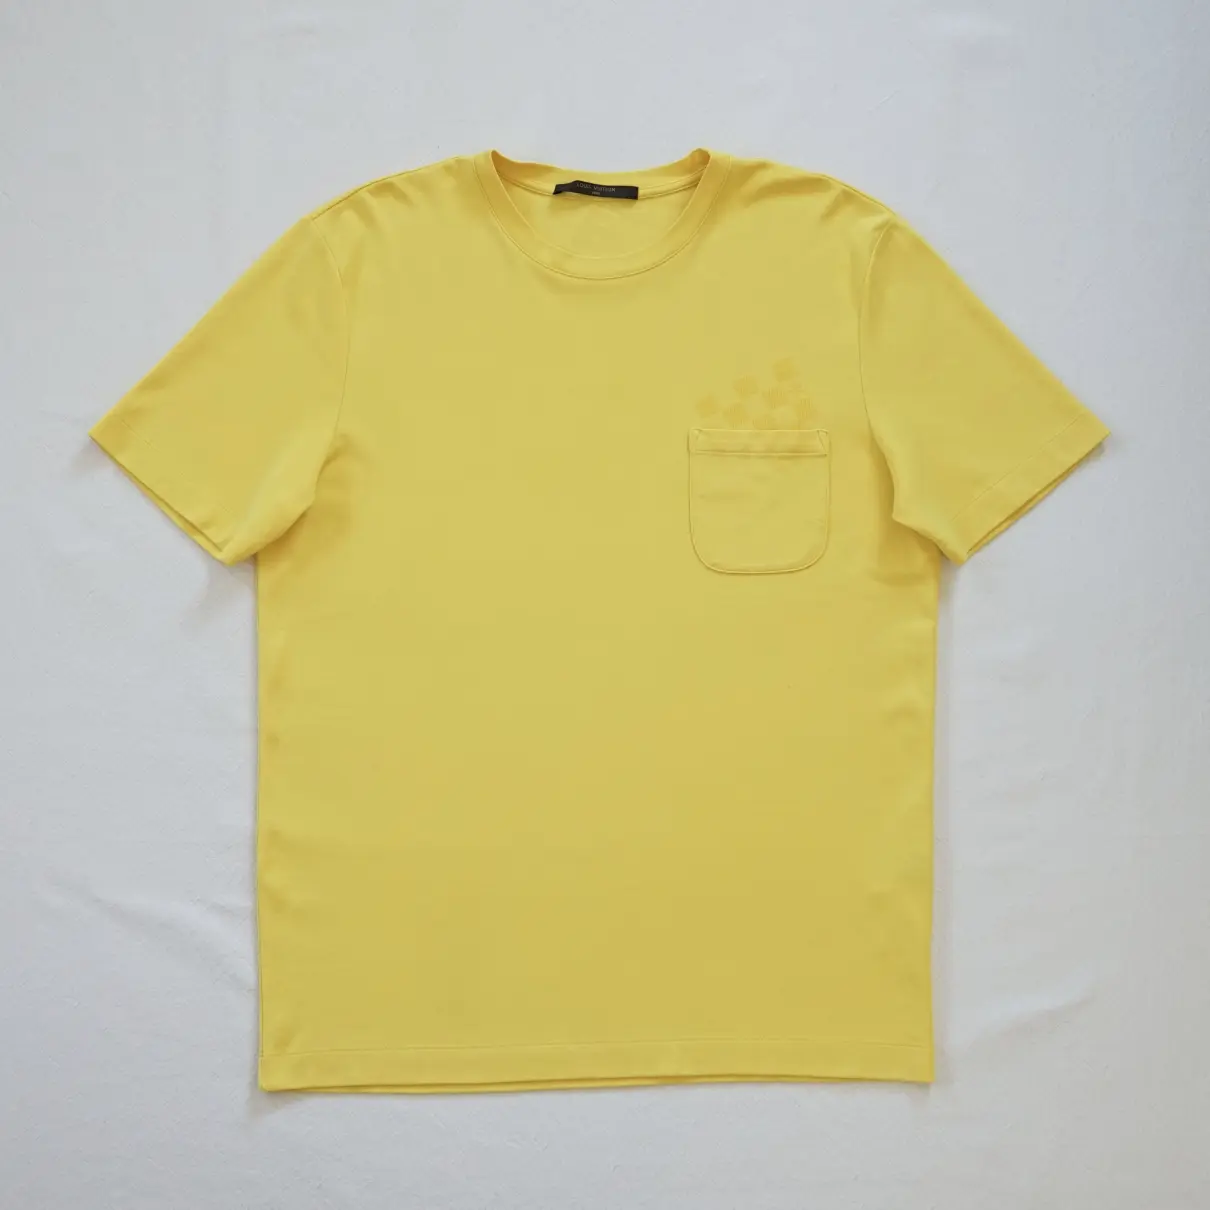 Buy Louis Vuitton Yellow Cotton T-shirt online